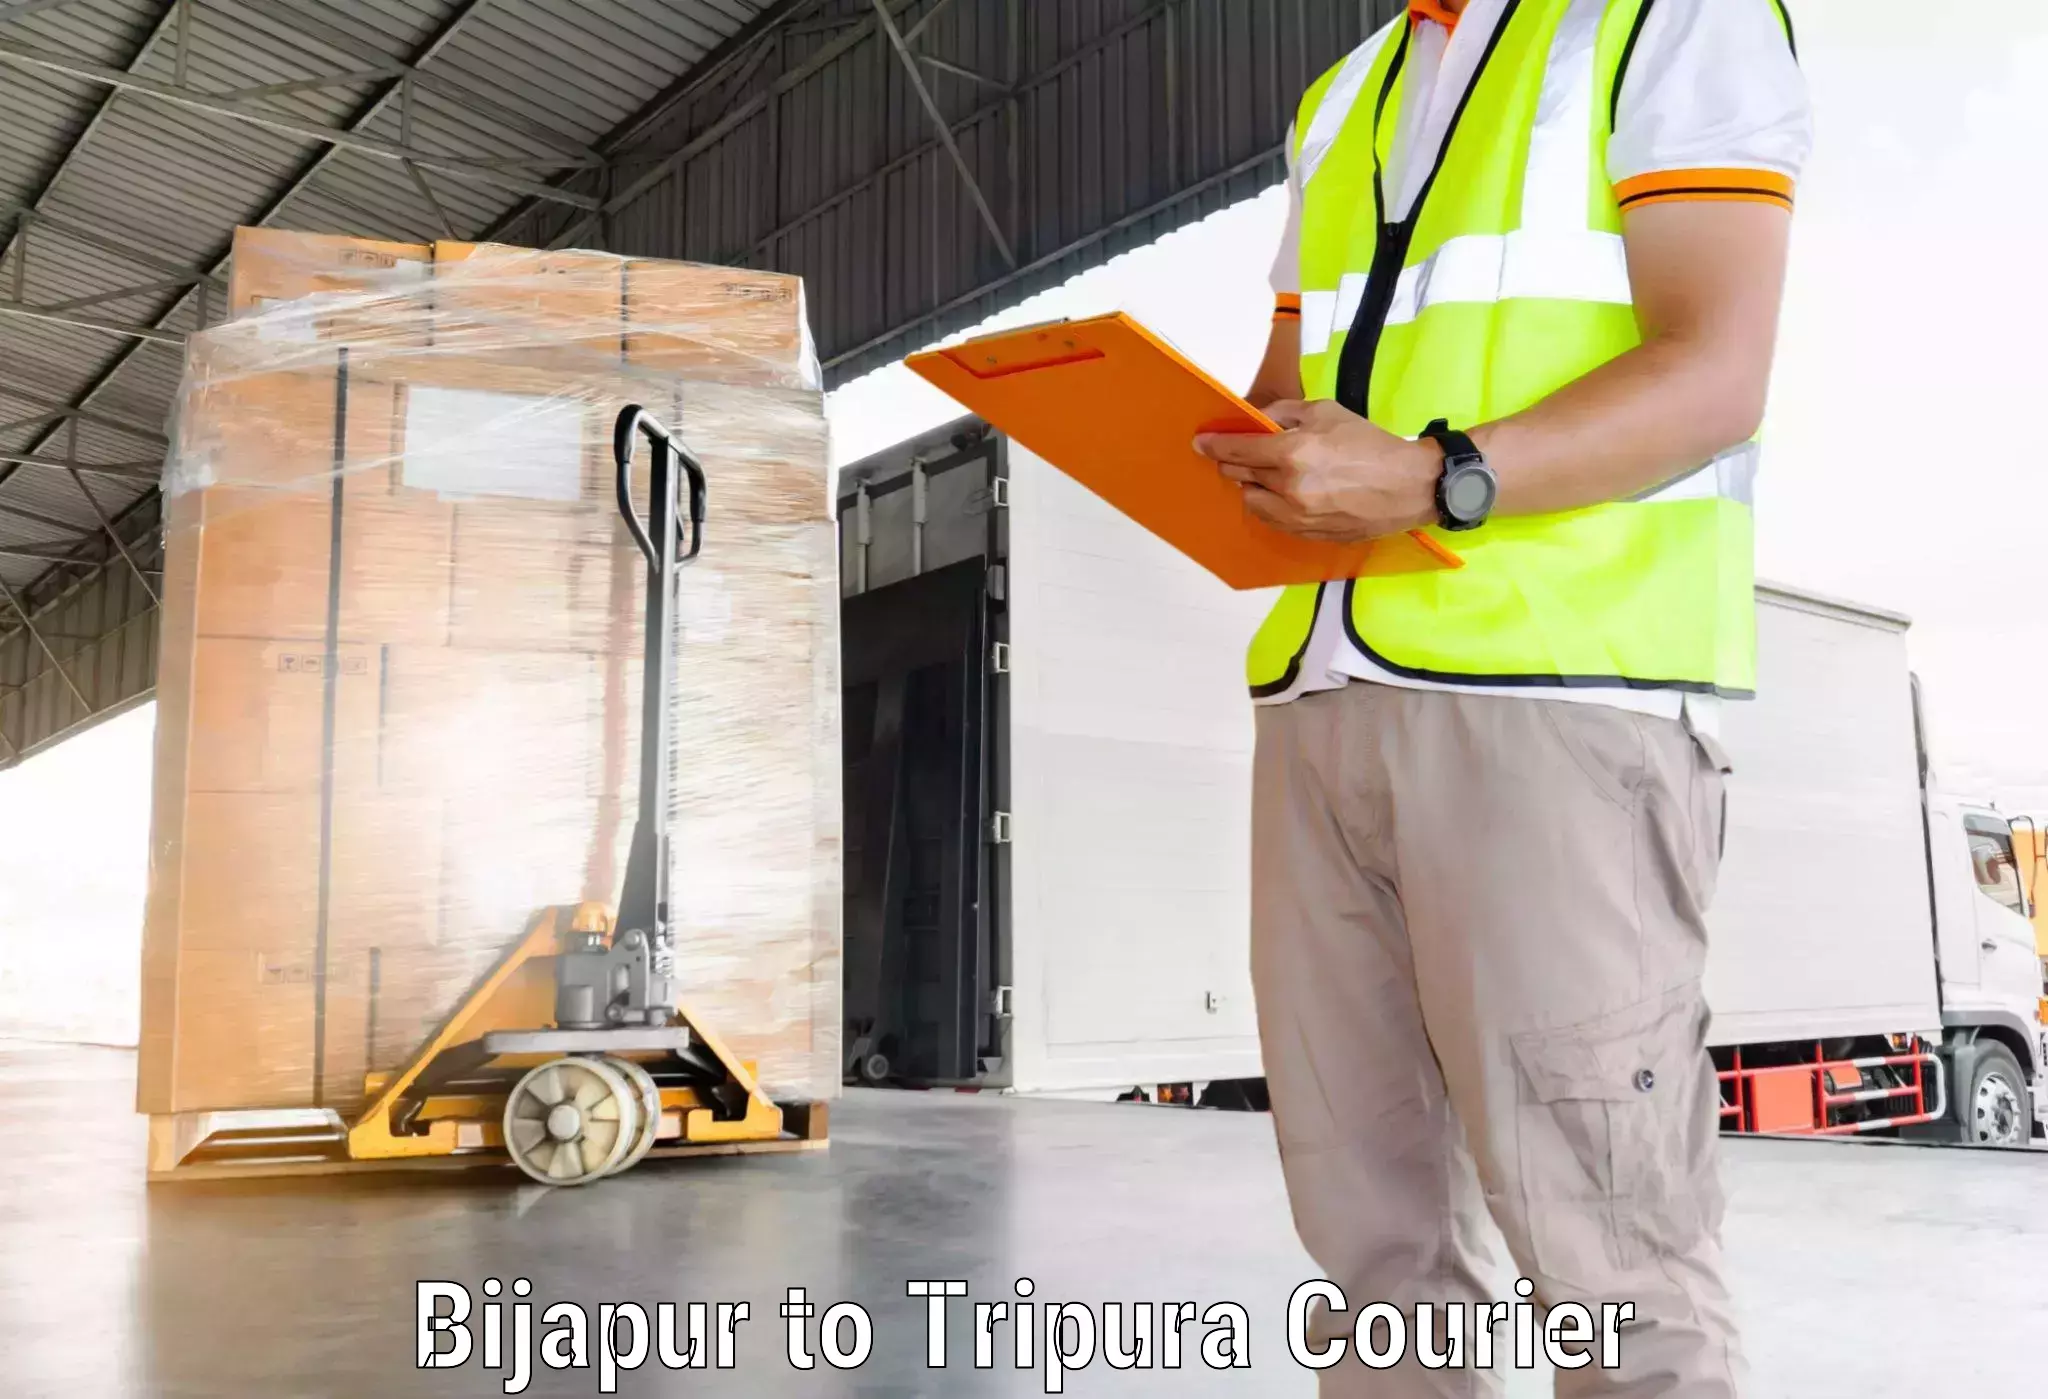 Cargo delivery service Bijapur to Udaipur Tripura